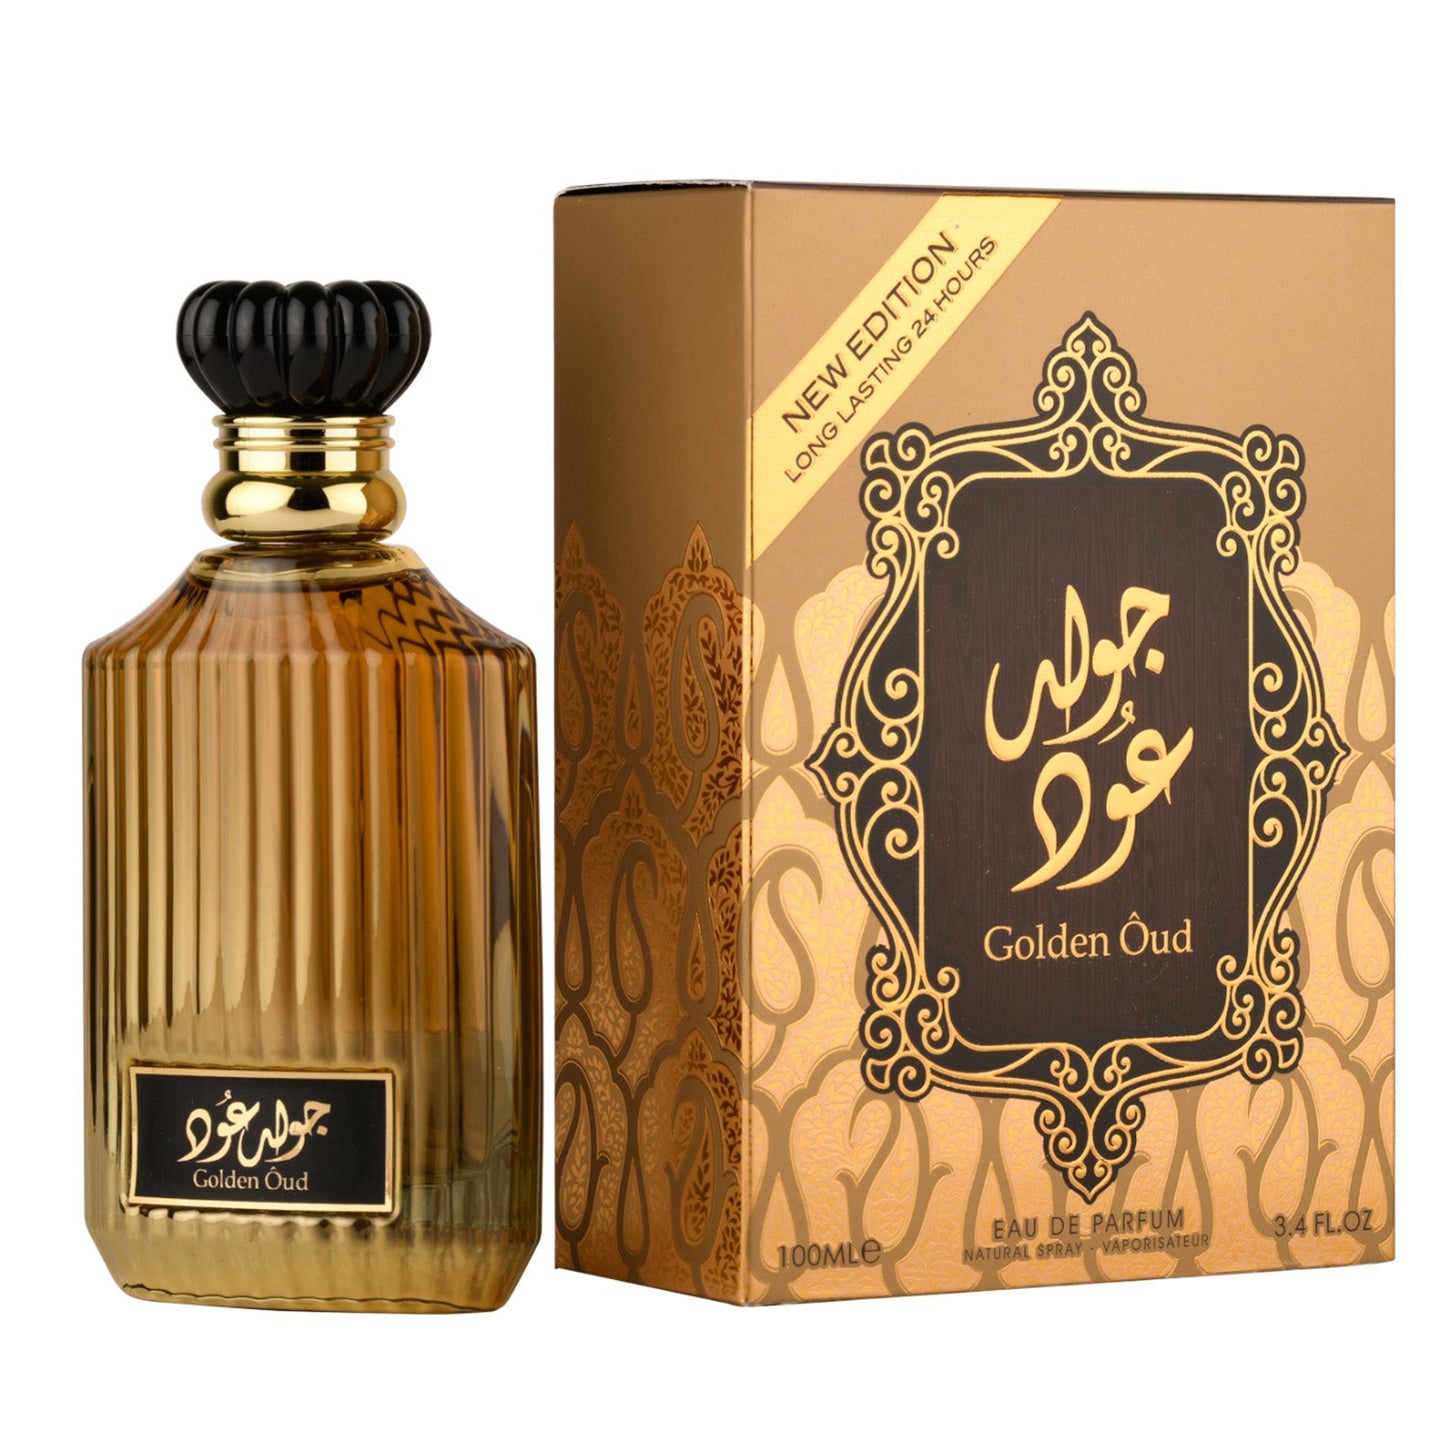 Golden Oud NEW EDITION Eau De Parfum 100ml Asdaaf-almanaar Islamic Store